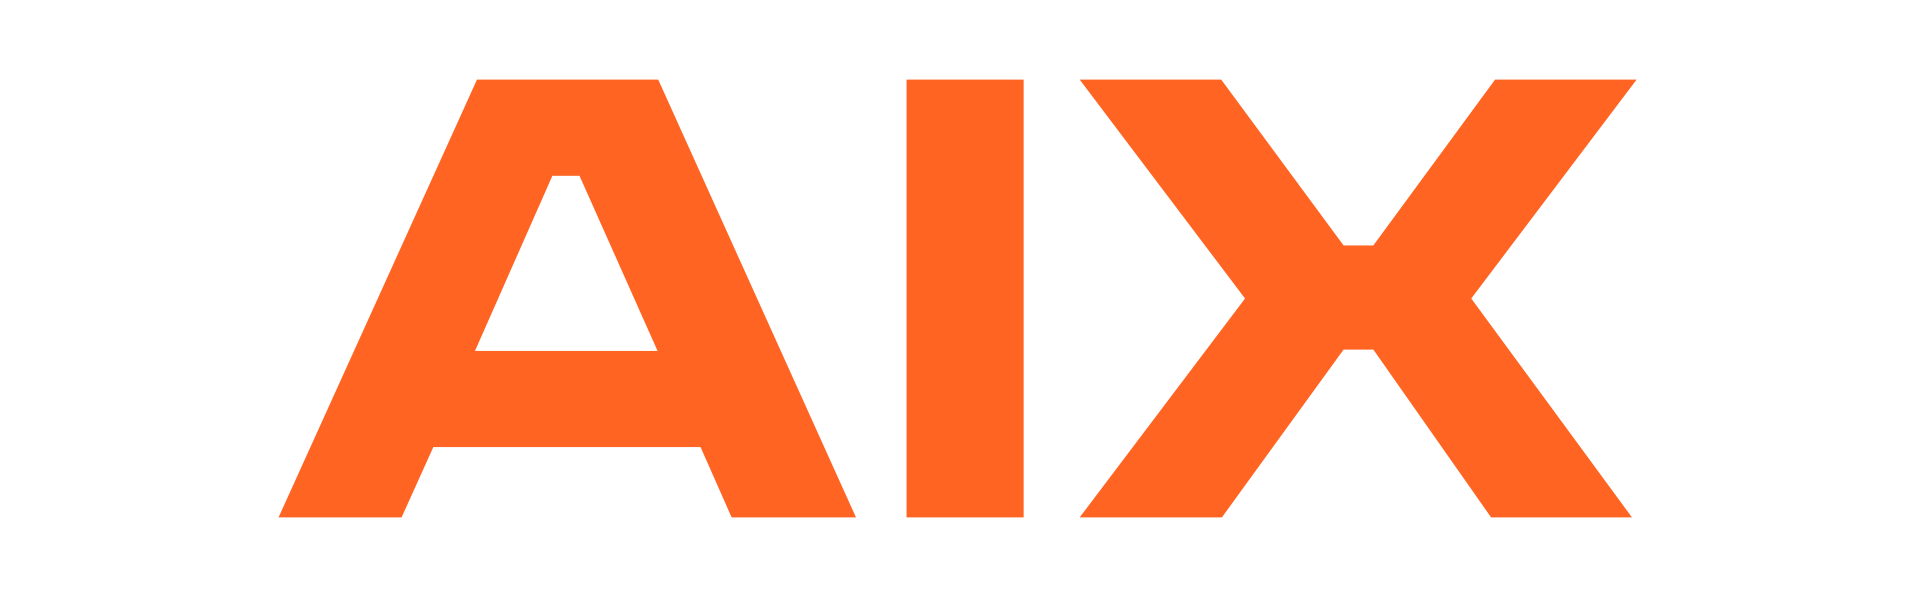 AIX Connect